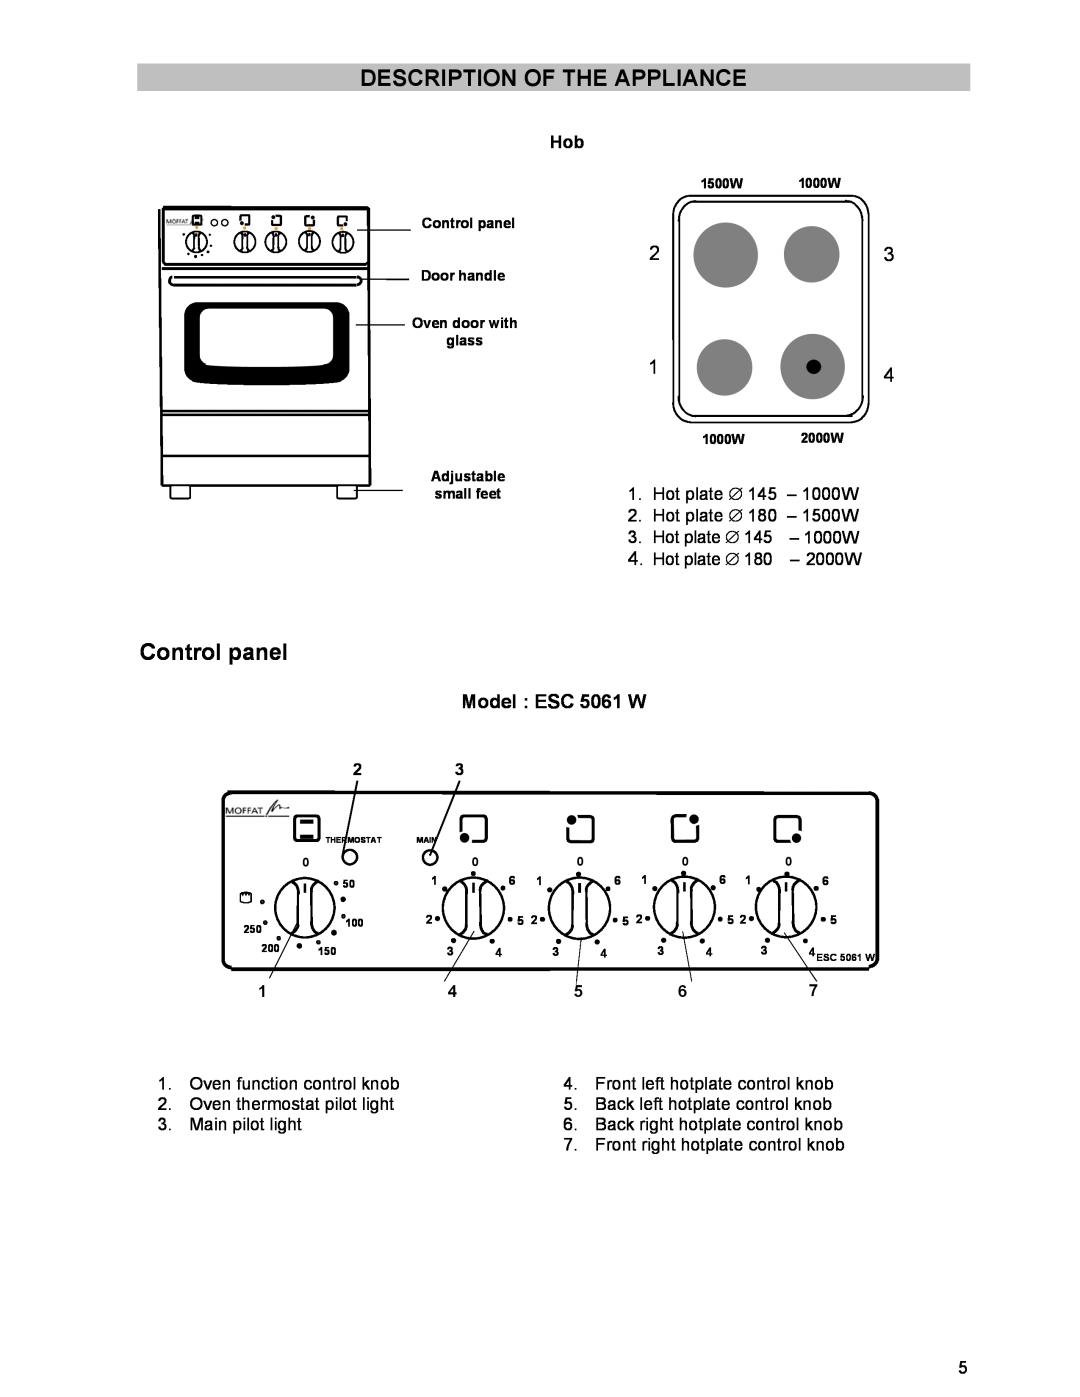 Tricity Bendix ESC 5061 W GB manual Description Of The Appliance, Control panel, Model ESC 5061 W 